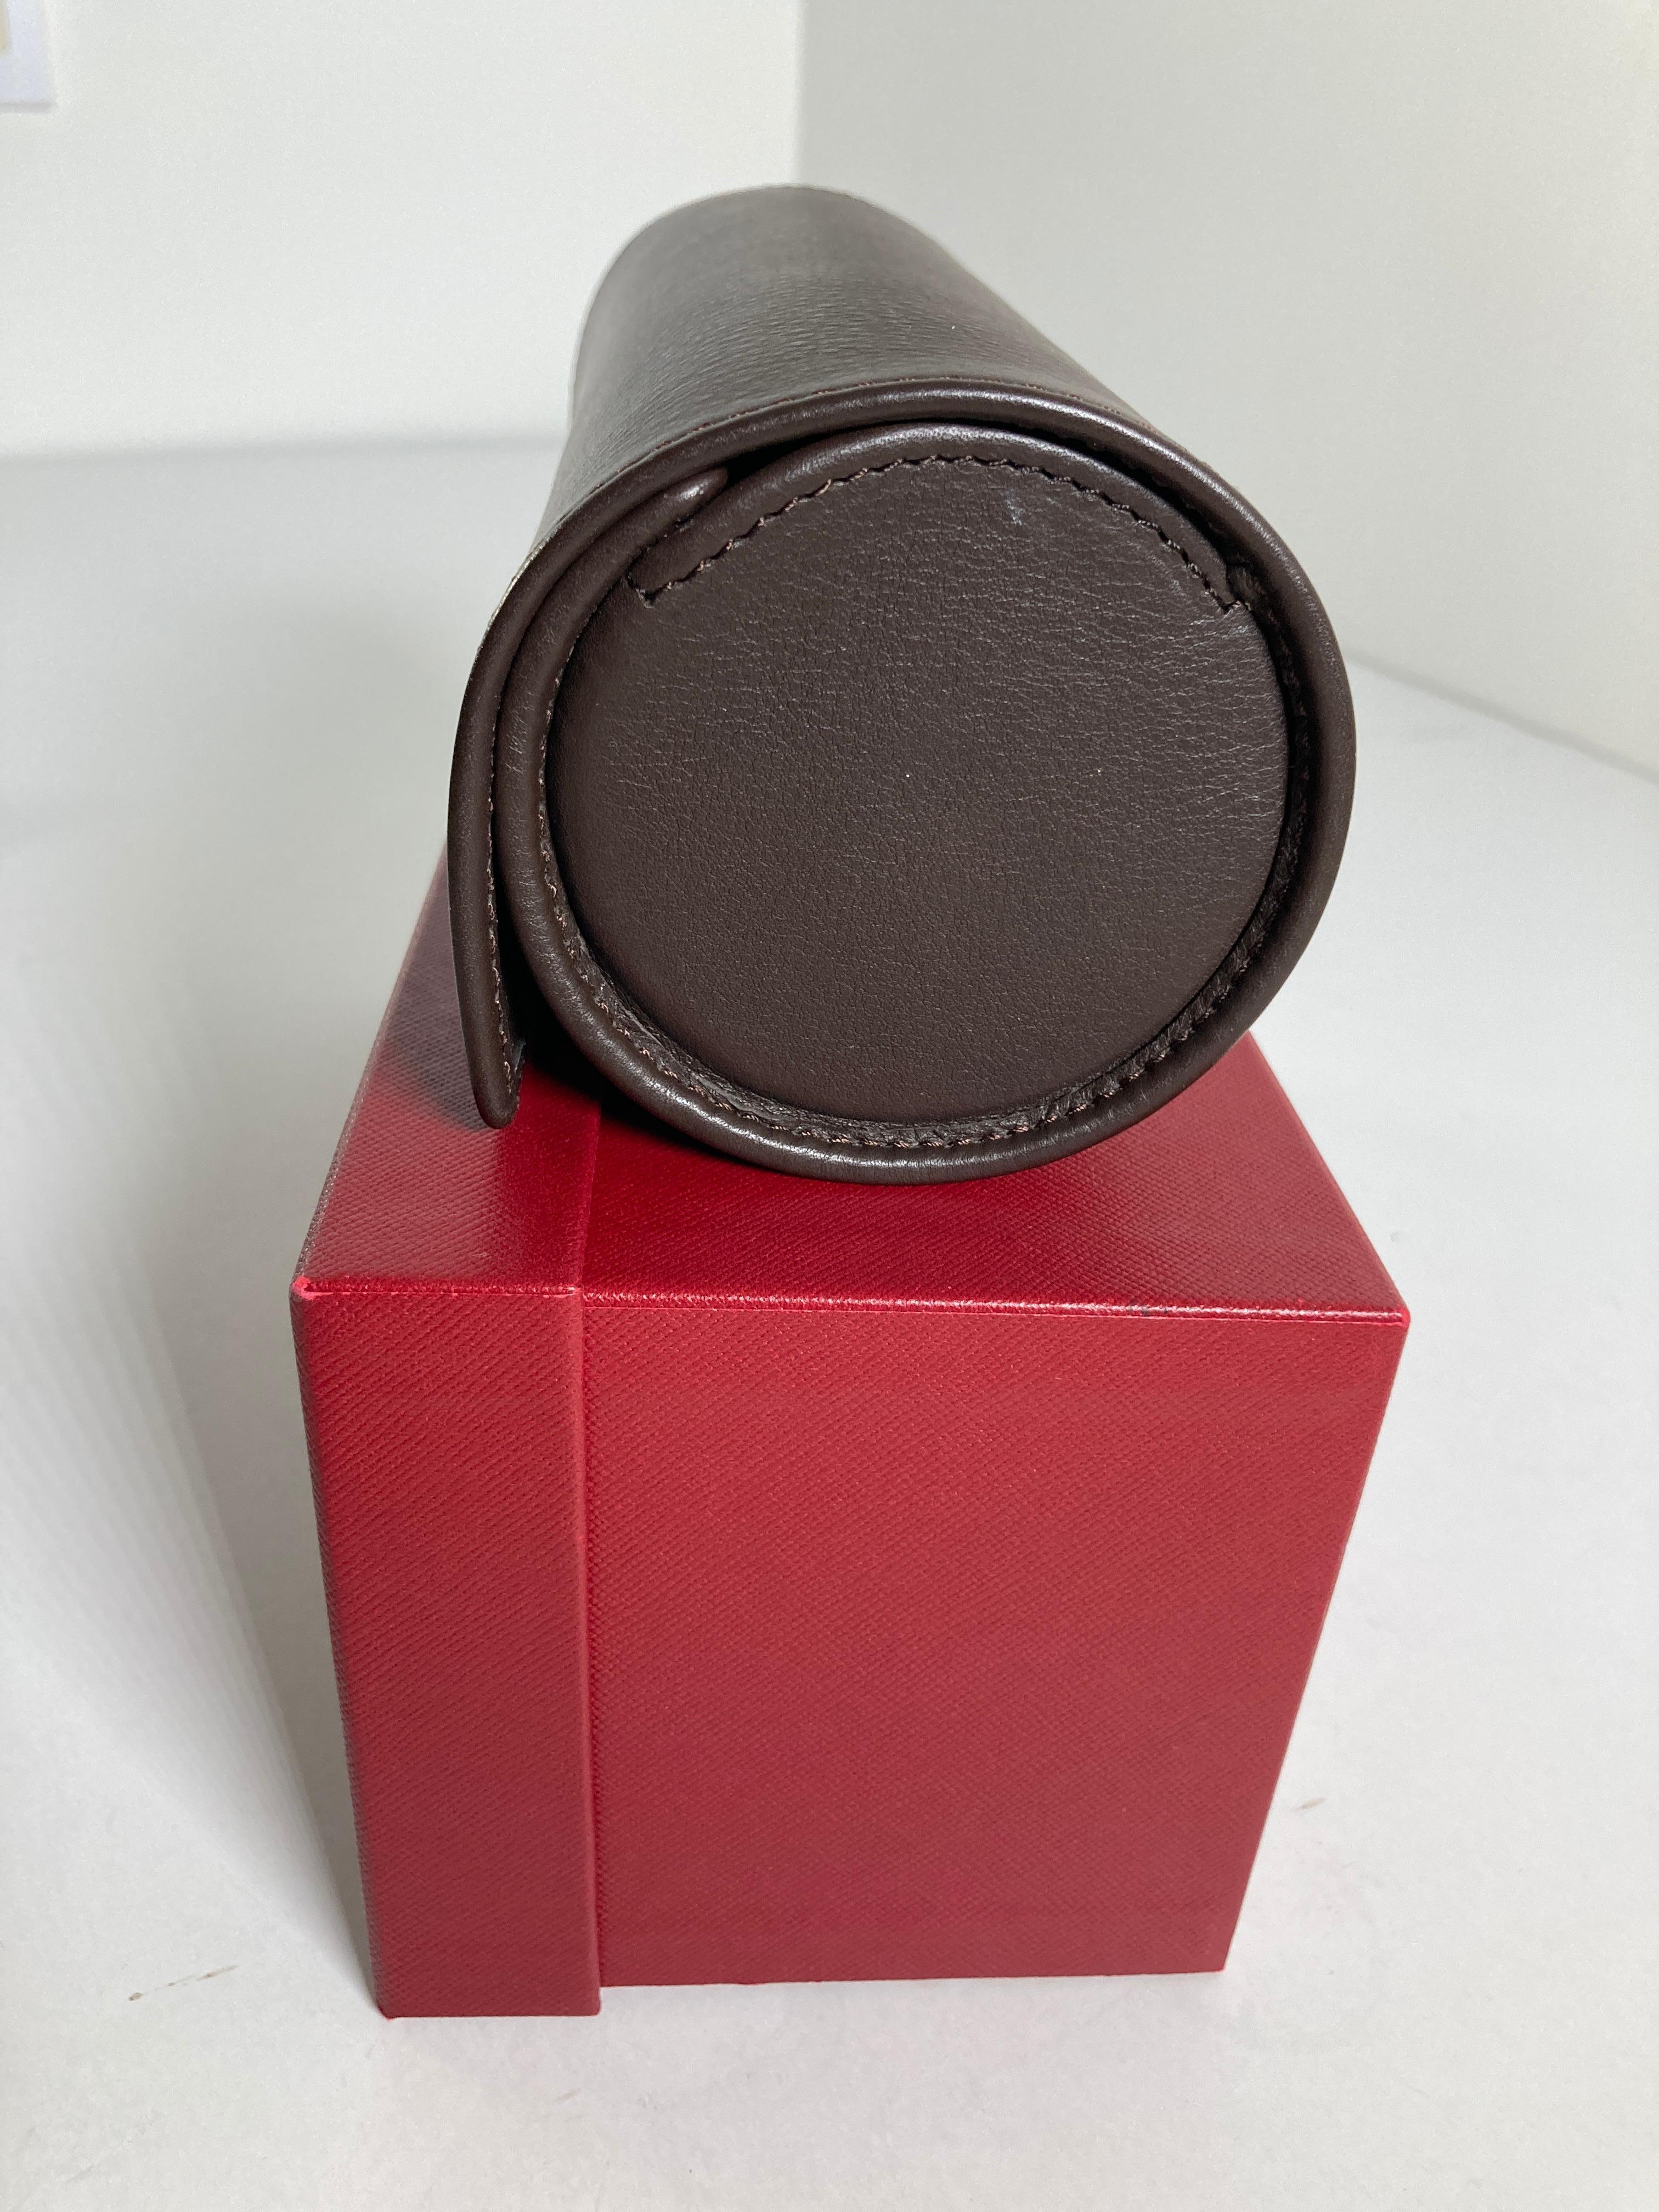 Cartier Brown Leather Gold Hardware Travel Watch Storage Case 1